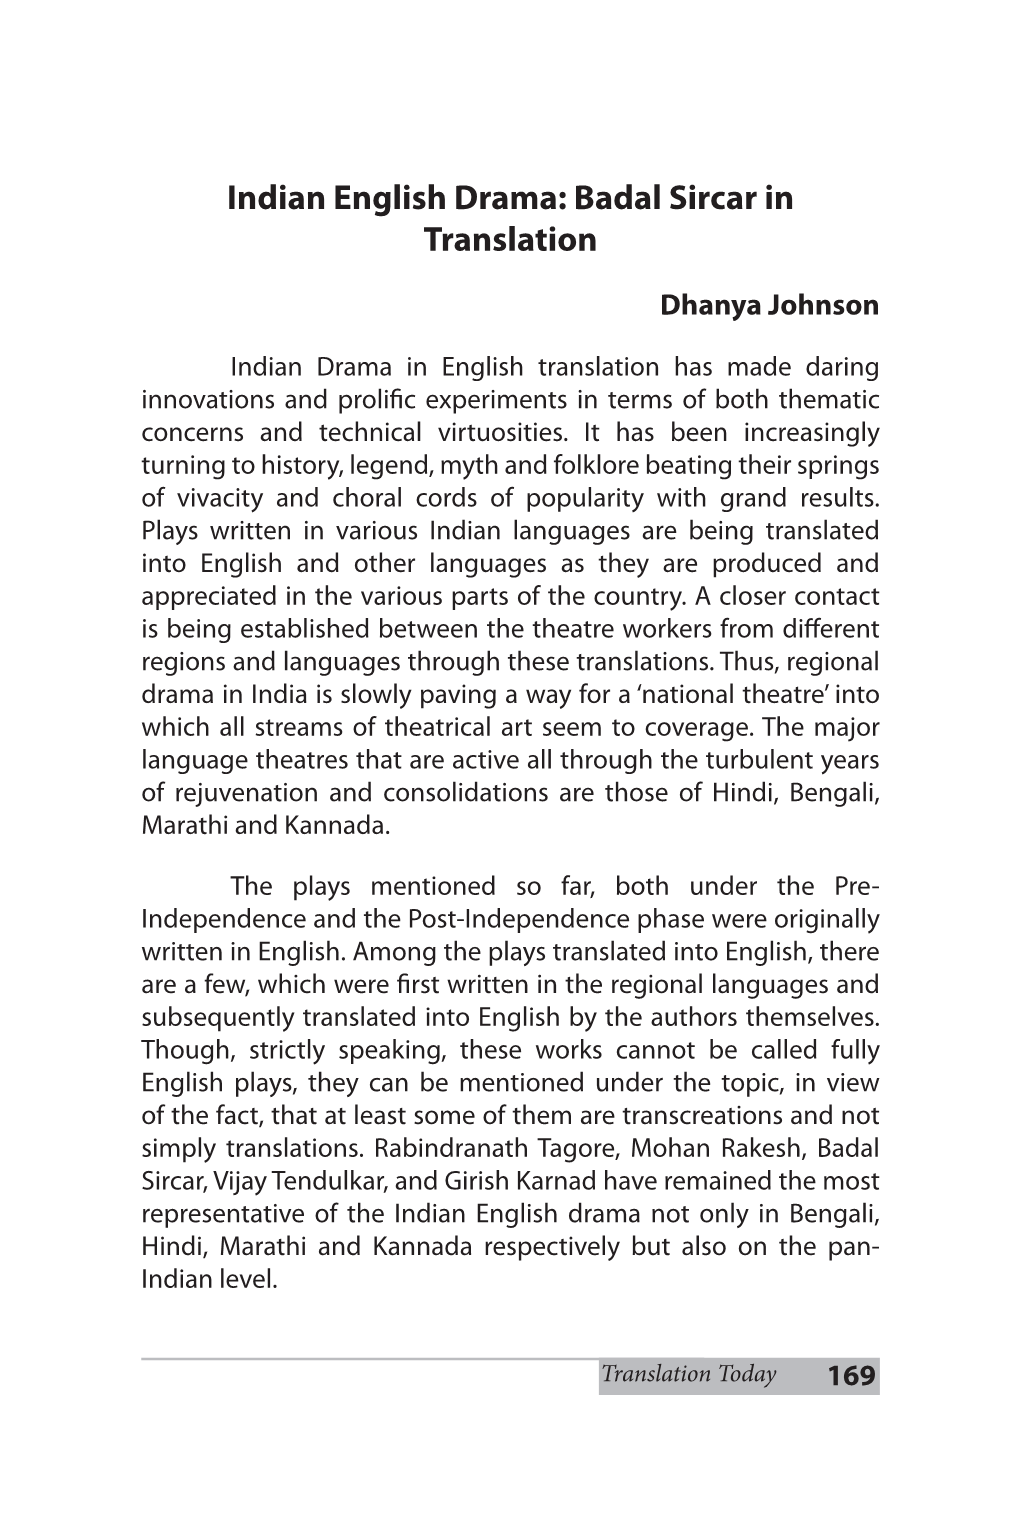 Indian English Drama: Badal Sircar in Translation